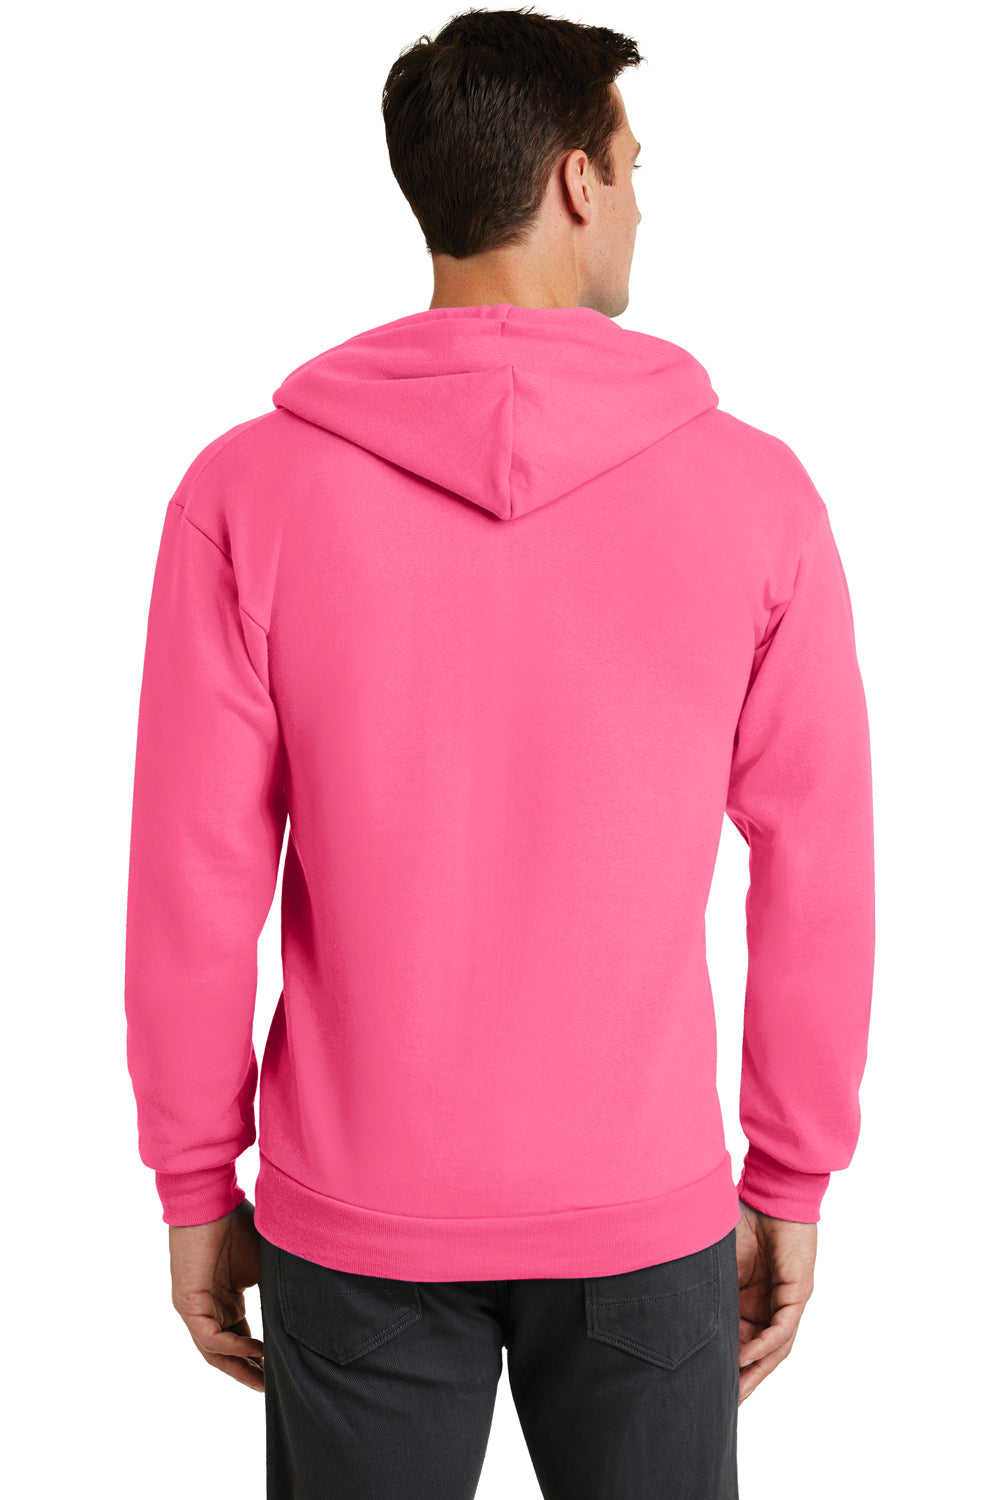 Port & Company PC78ZH Mens Core Fleece Full Zip Hooded Sweatshirt Hoodie Neon Pink Back